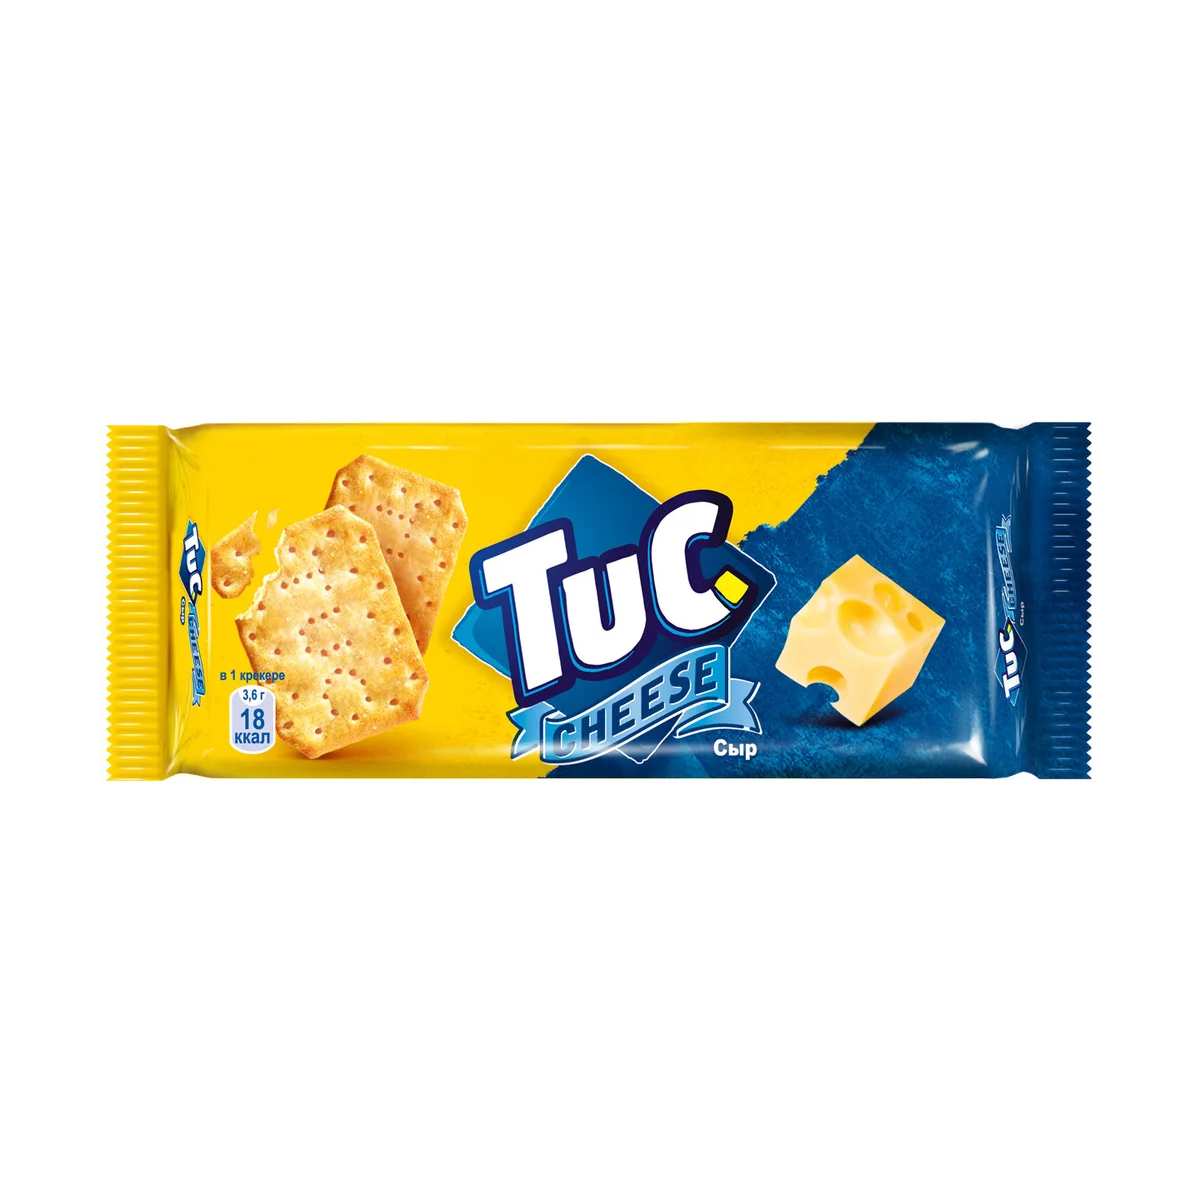 Крекер Tuc со вкусом сыра, 100 г крекер tuc со вкусом копченые колбаски 100 г